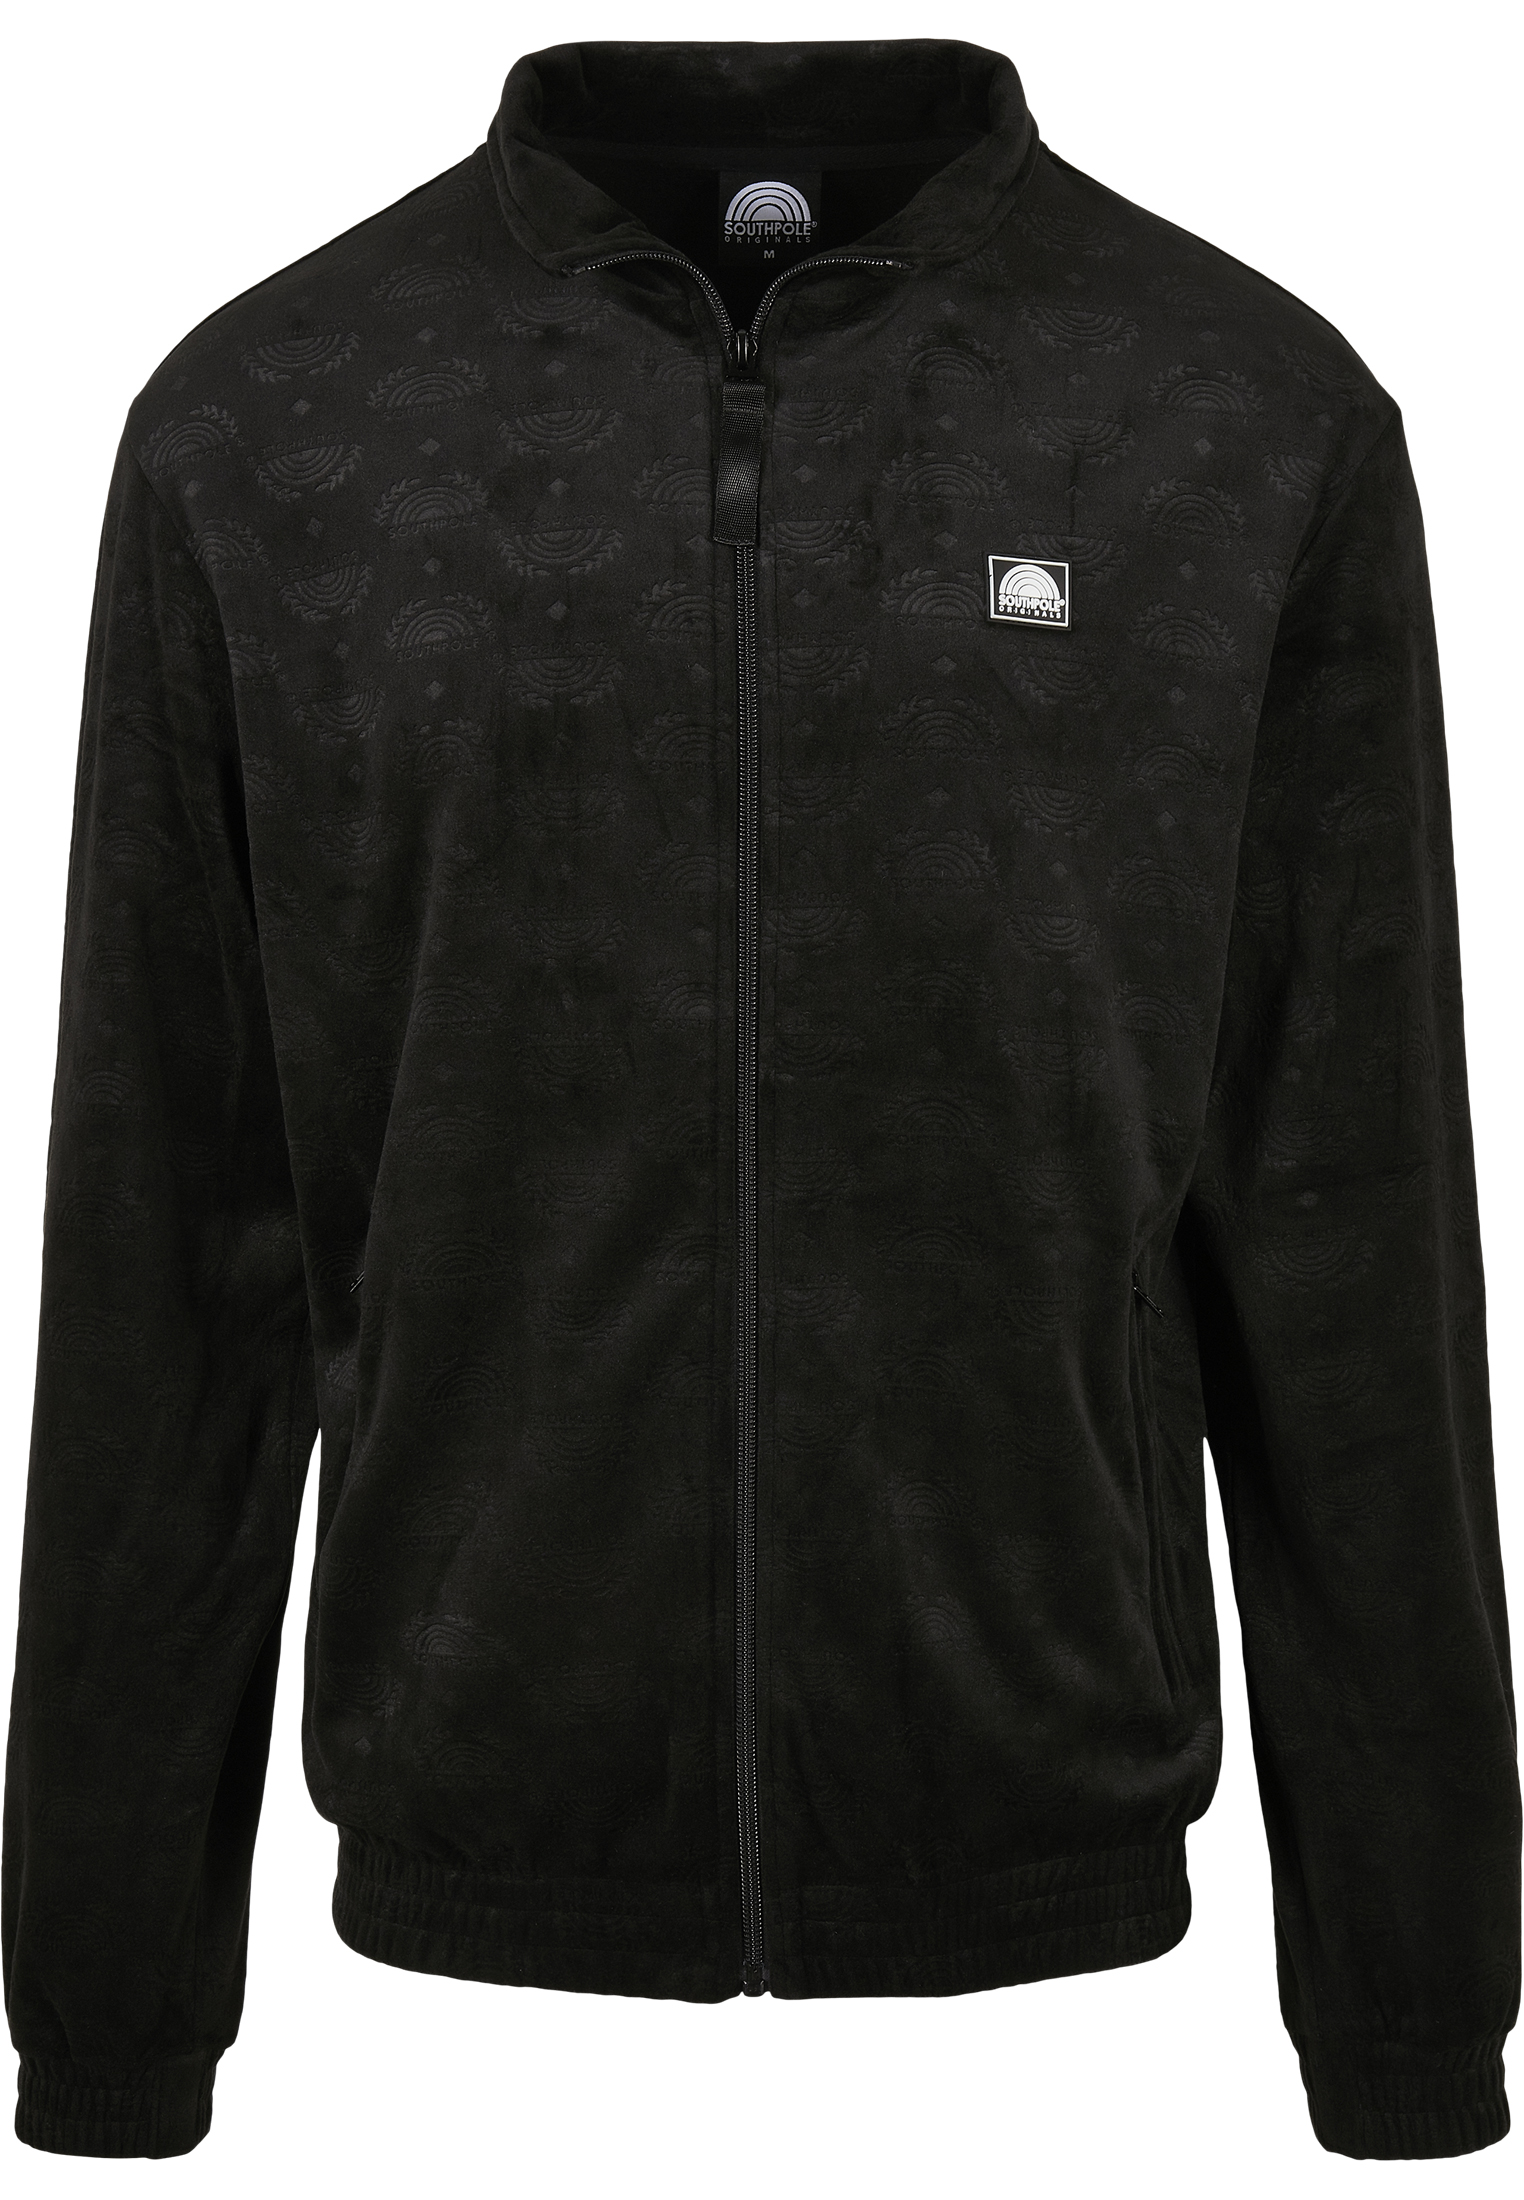 Saisonware Southpole AOP Velour Jacket in Farbe black